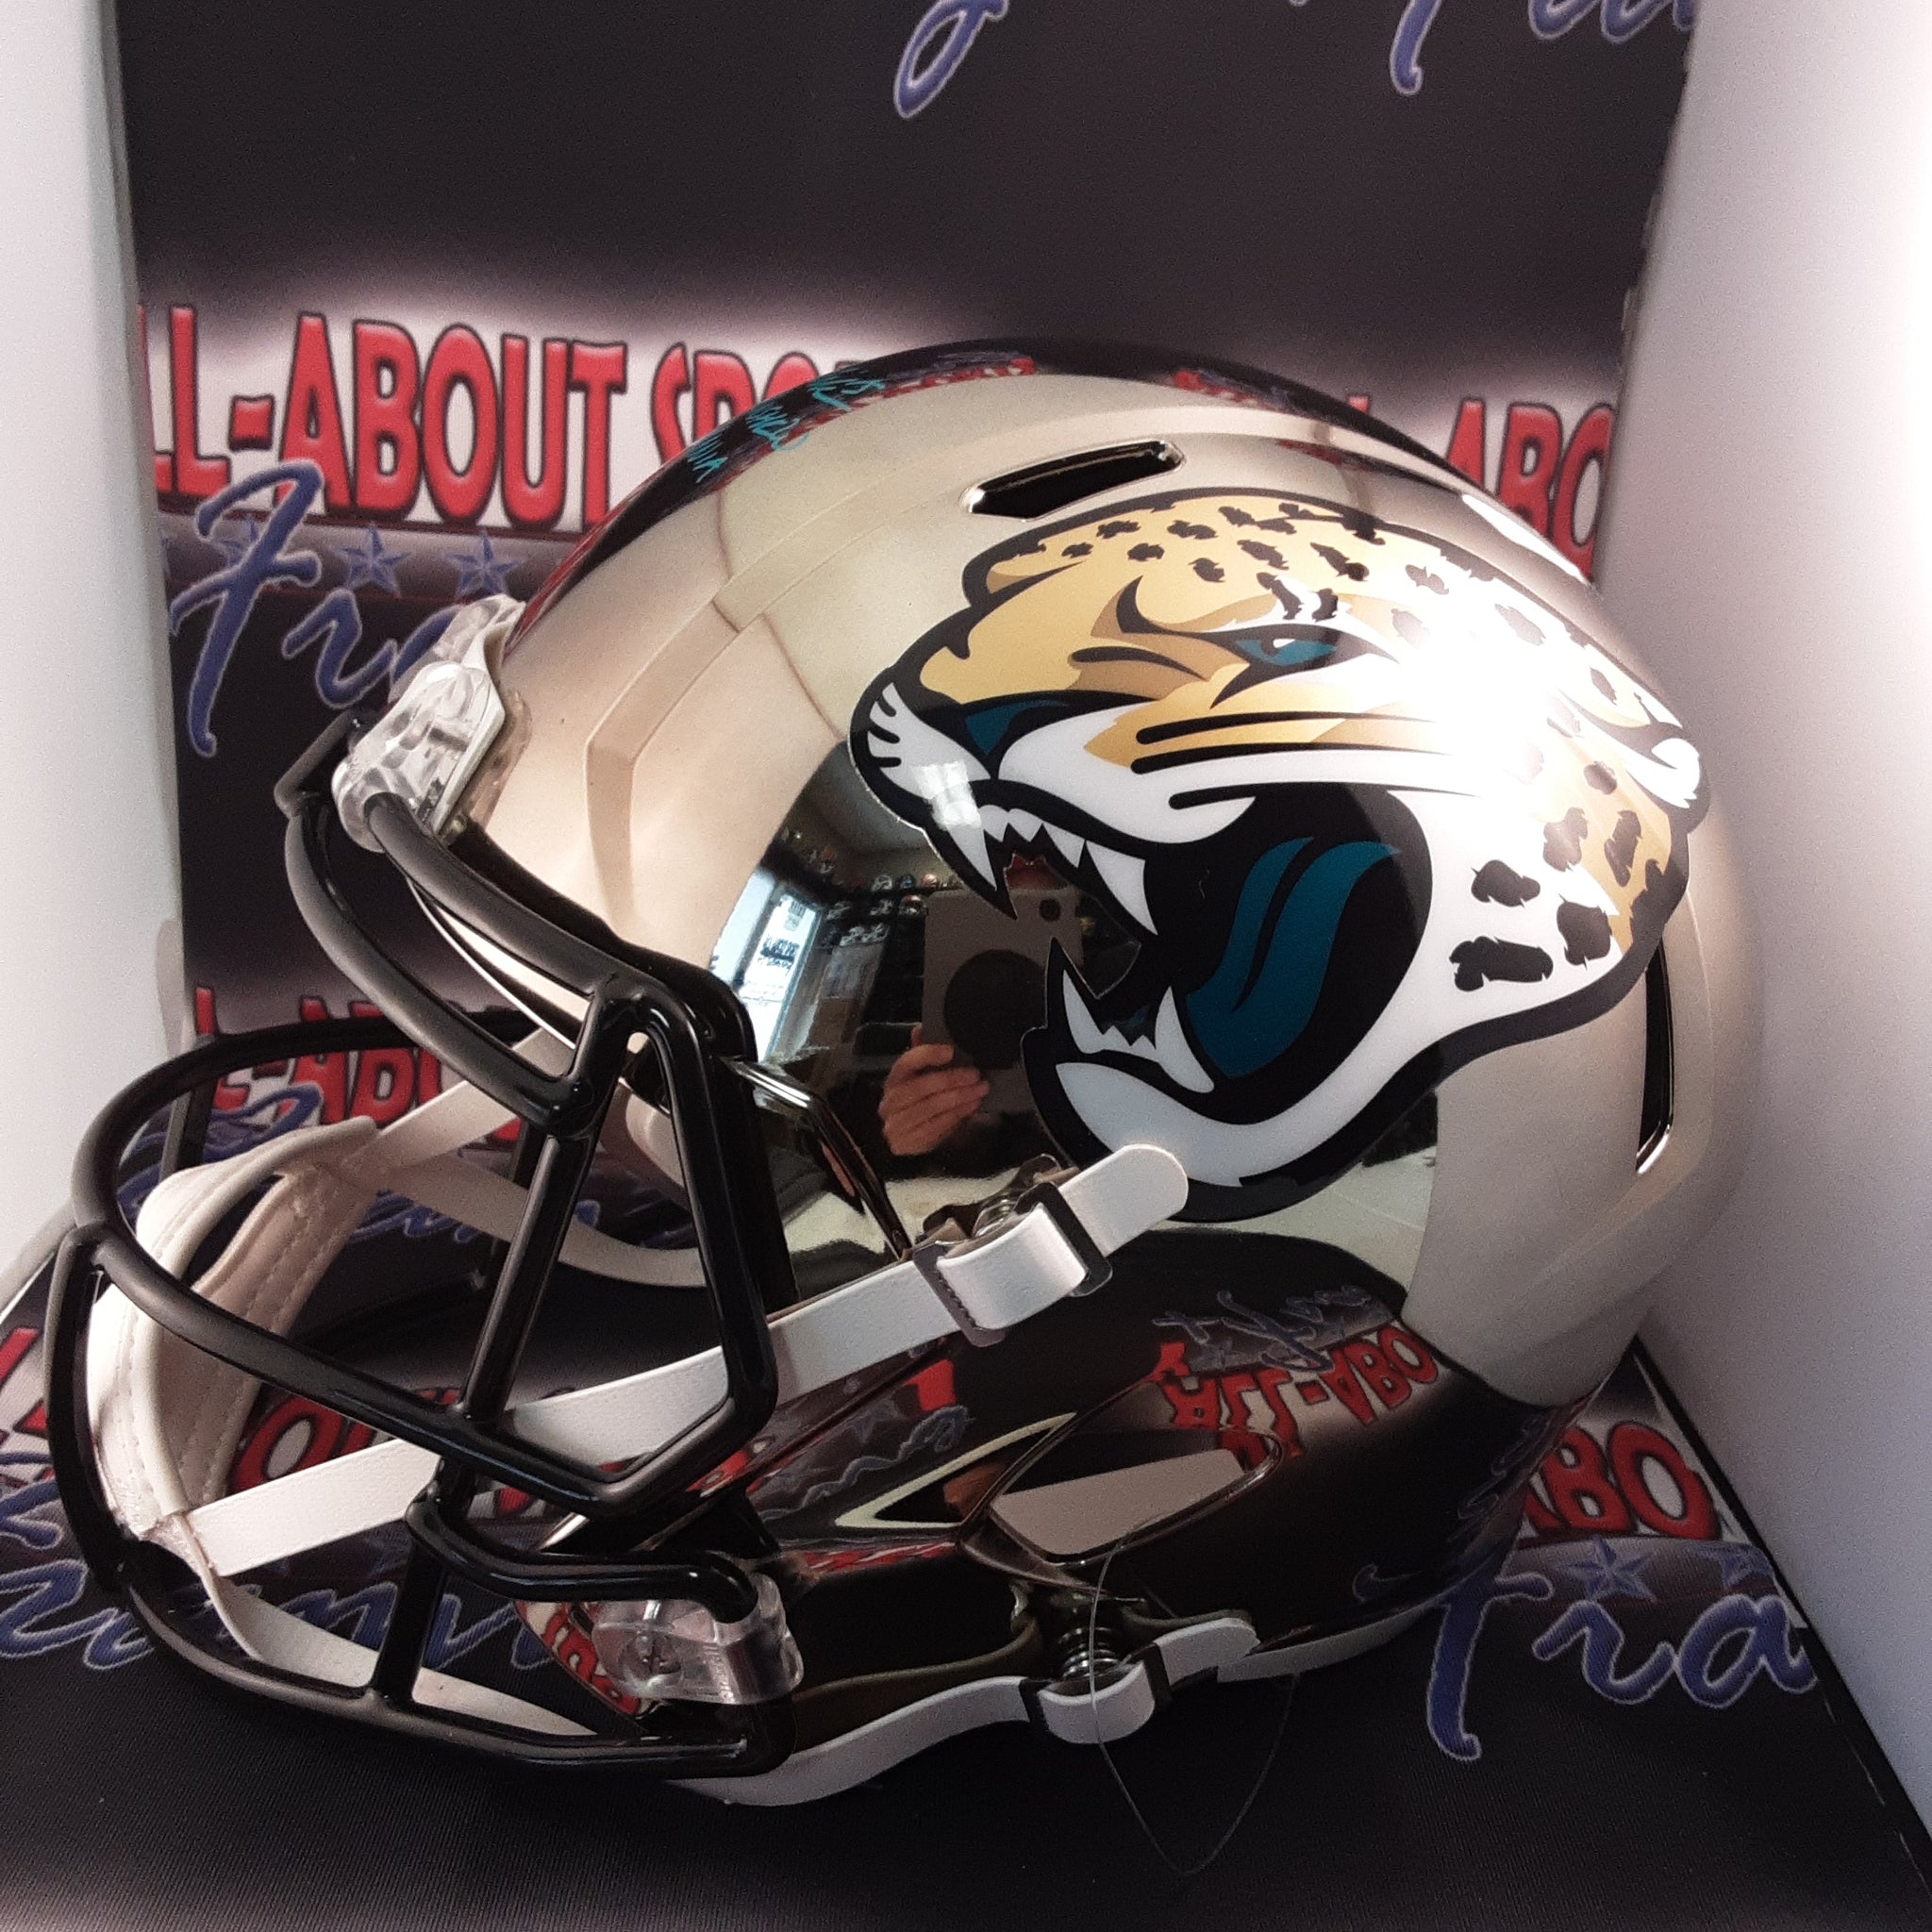 Gardner Minshew Authentic Signed Autographed Full-size Replica Helmet JSA